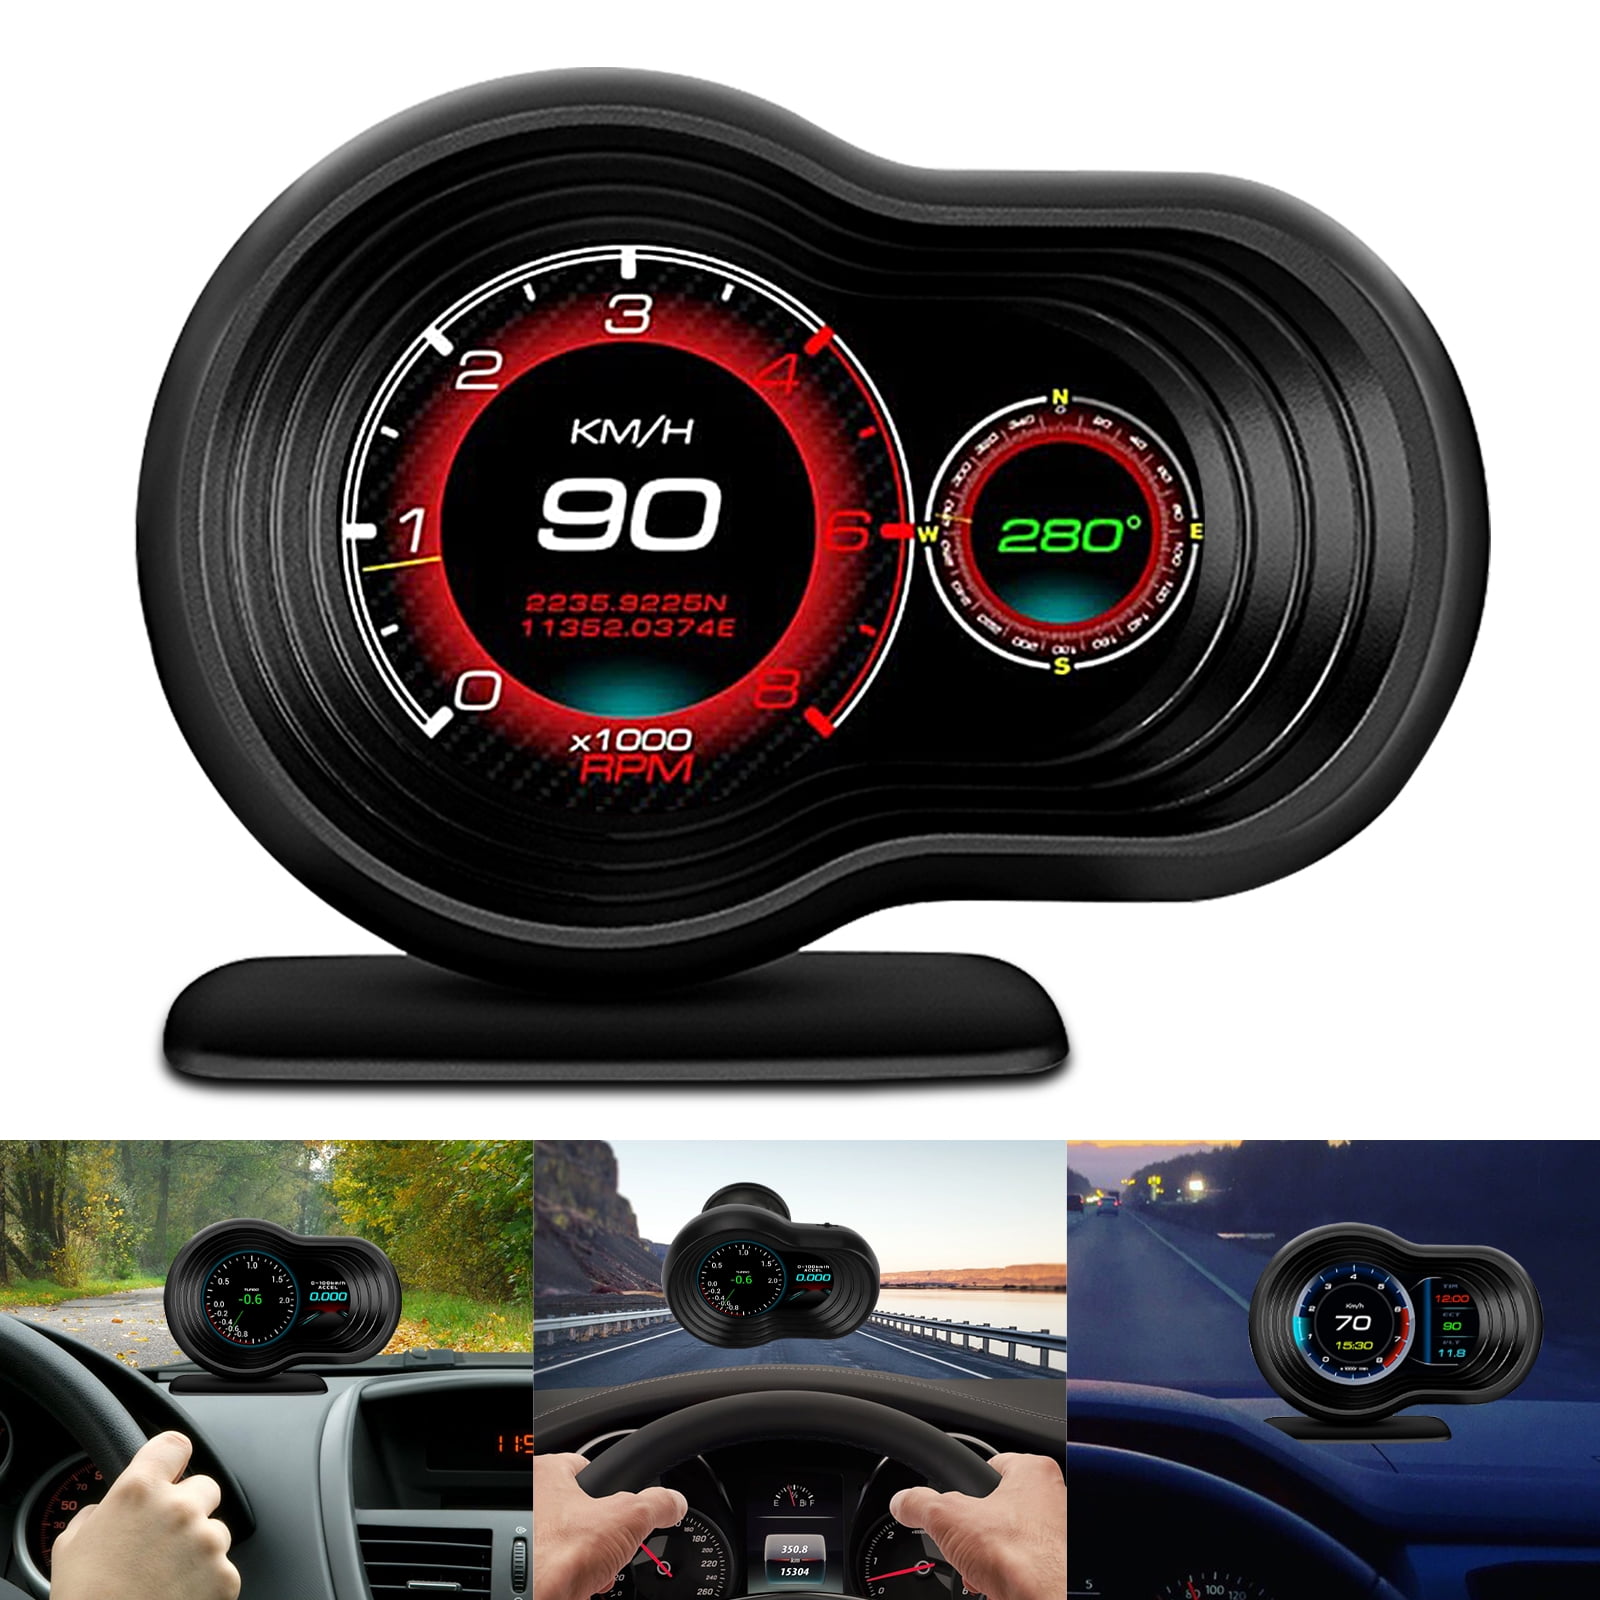 Digital OBD2 GPS Speedometer, EEEkit Car Hud Head-Up Display, Dual System  Car Head Display with MPH Speed Alarm - Black 